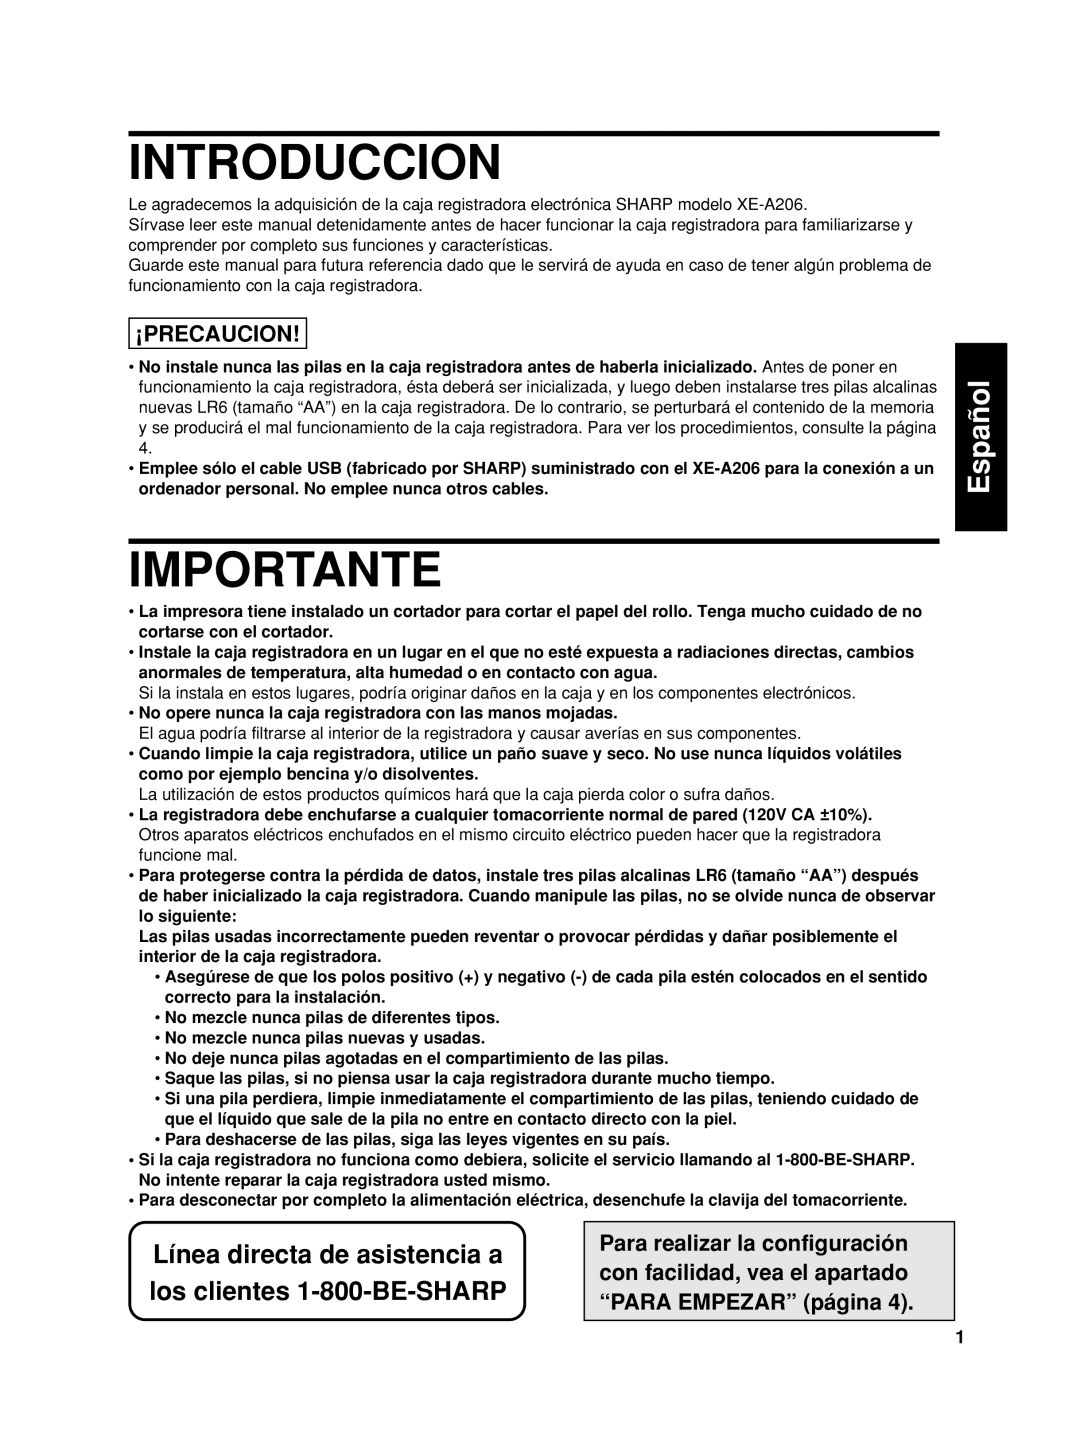 Sharp TINSZ2600RCZZ Introduccion, Importante, English Español, Línea directa de asistencia a, los clientes 1-800-BE-SHARP 